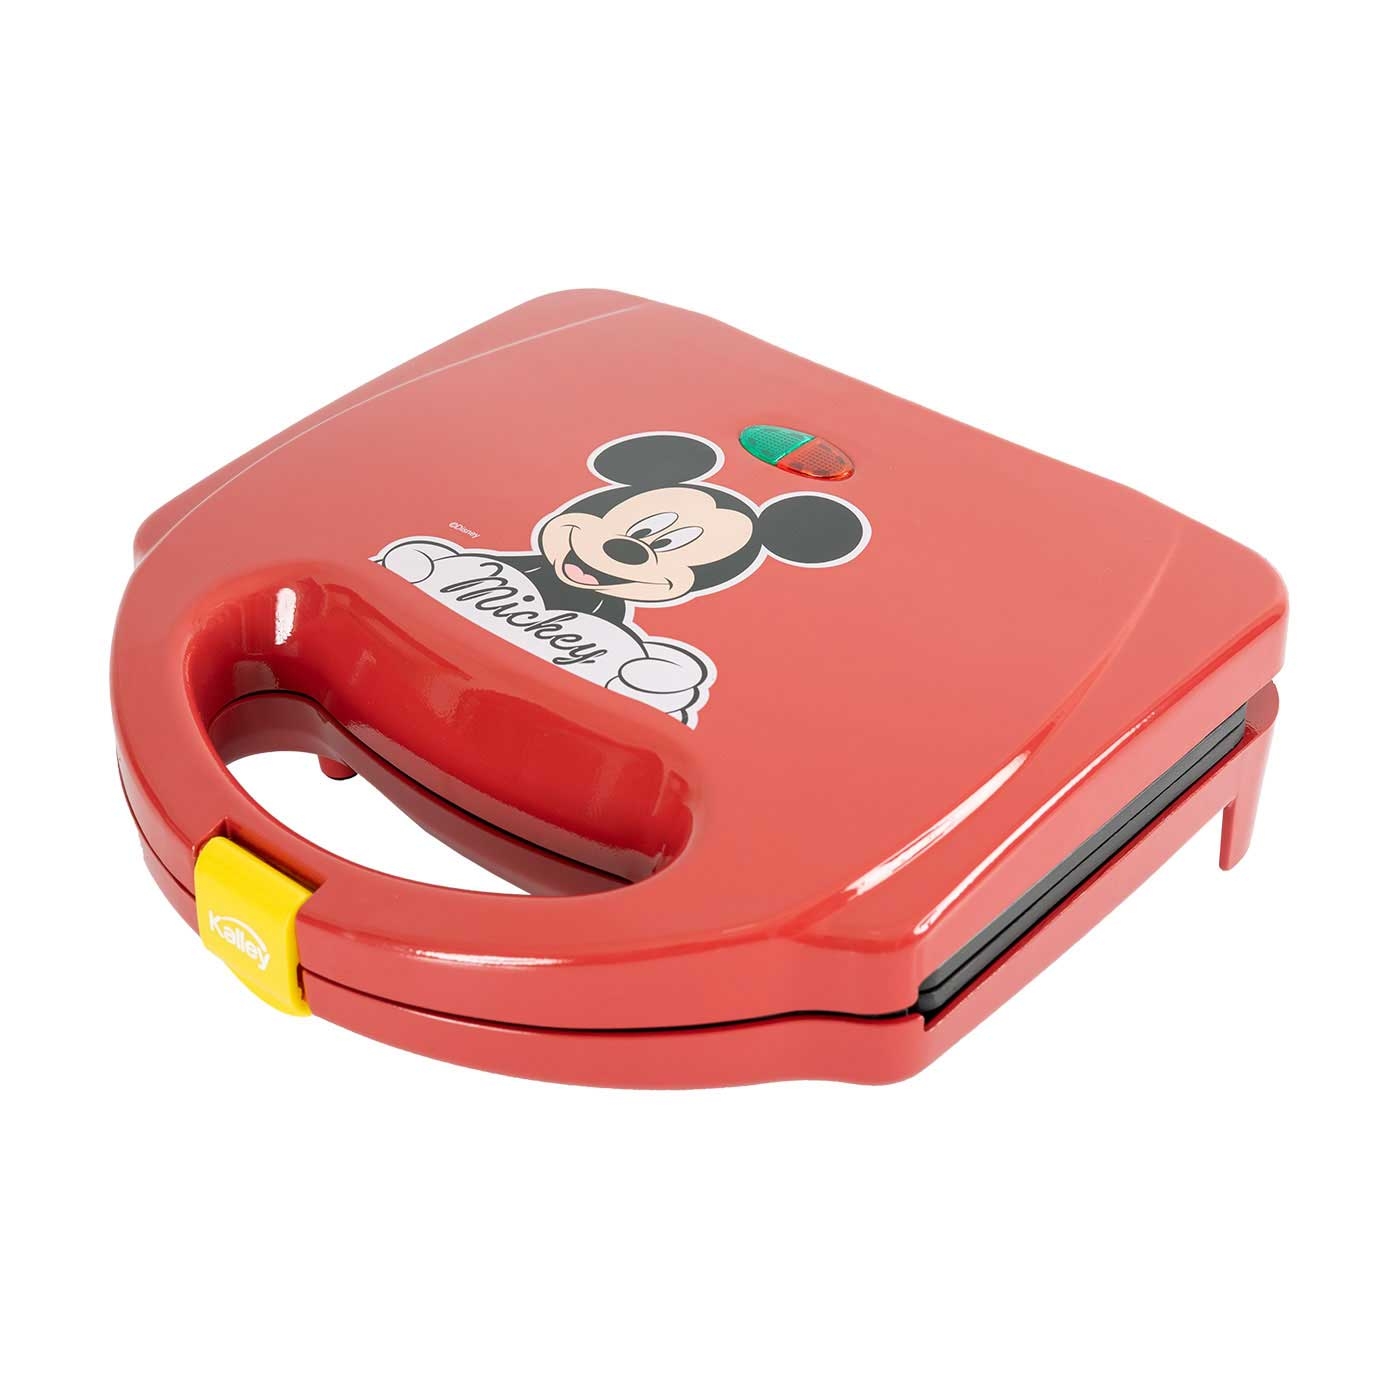 Sanduchera KALLEY Mickey Mouse De Disney K-DSM101 Roja 